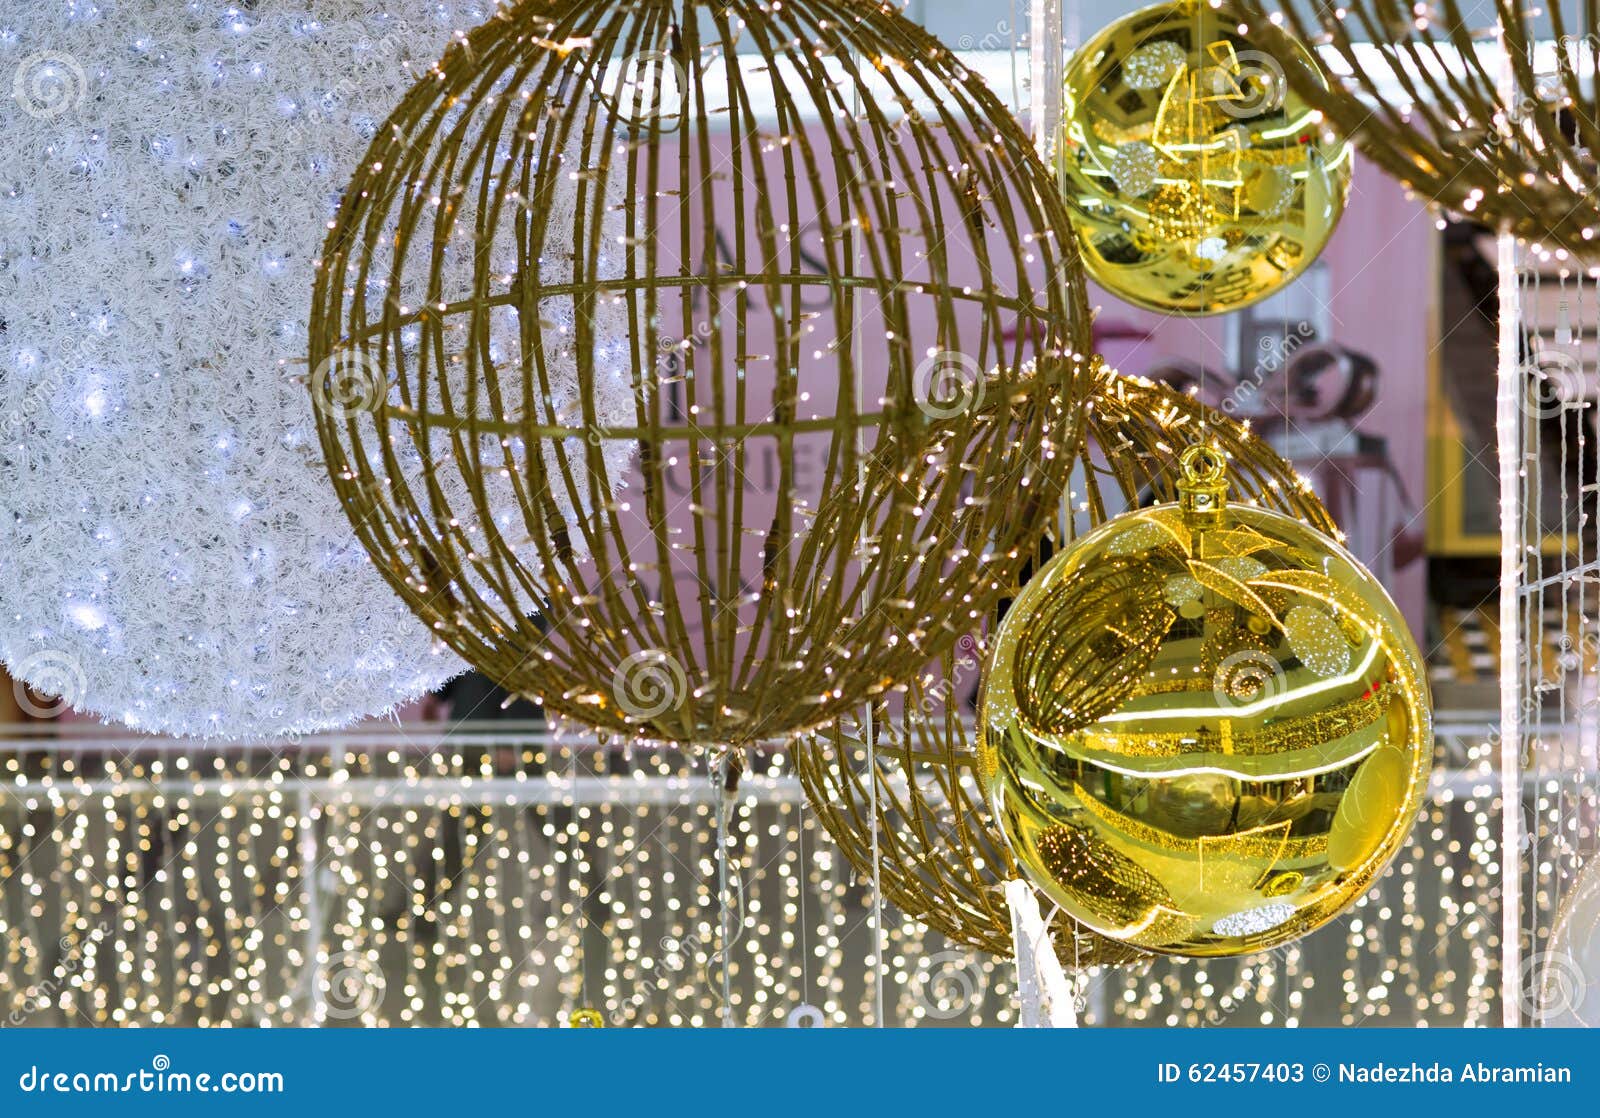 Christmas Decoration, Ball and Garland. Stock Image - Image of light ...